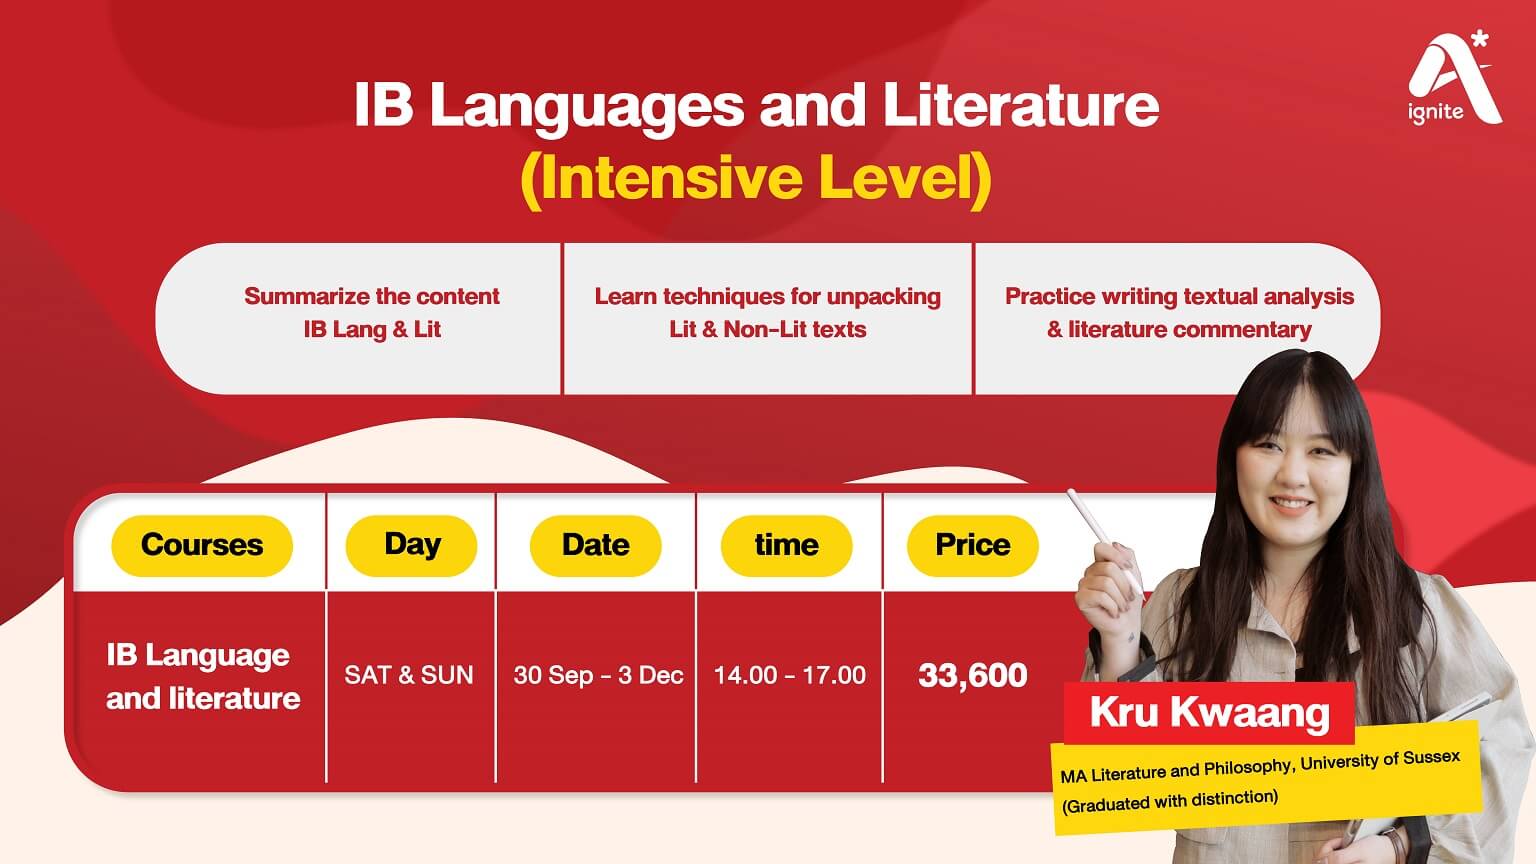 IB language & literature intensive level course by Ignite A*.